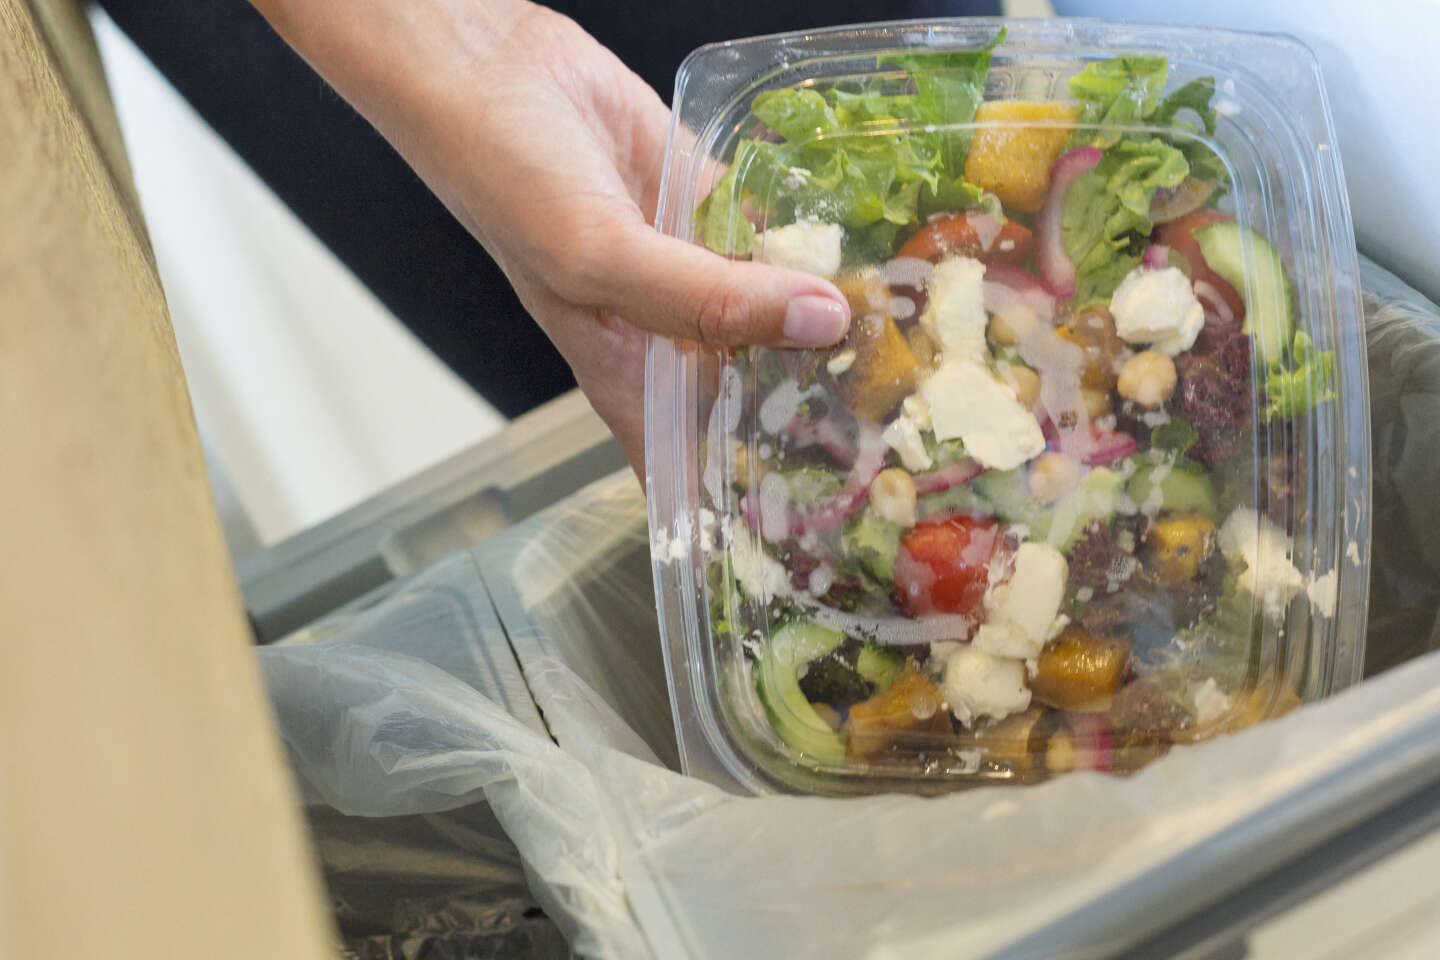 Company restaurants go zero waste